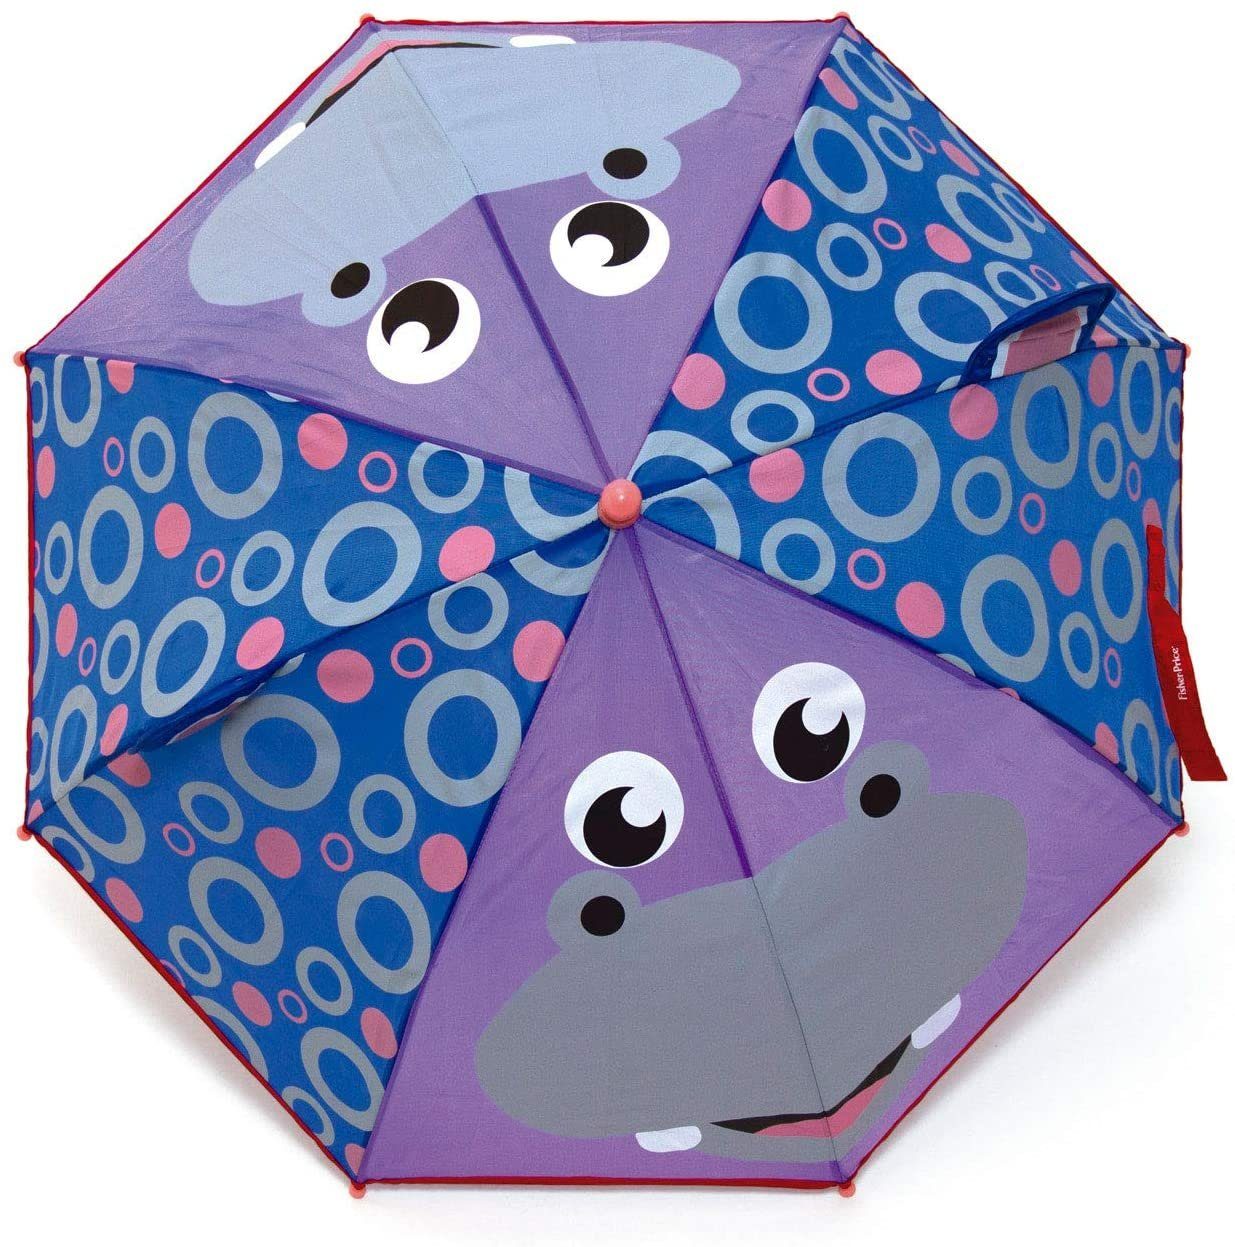 Regenschirm Wahl nach Ø 3D-Figur Stockregenschirm FisherPrice 70cm Fisher-Price® Design